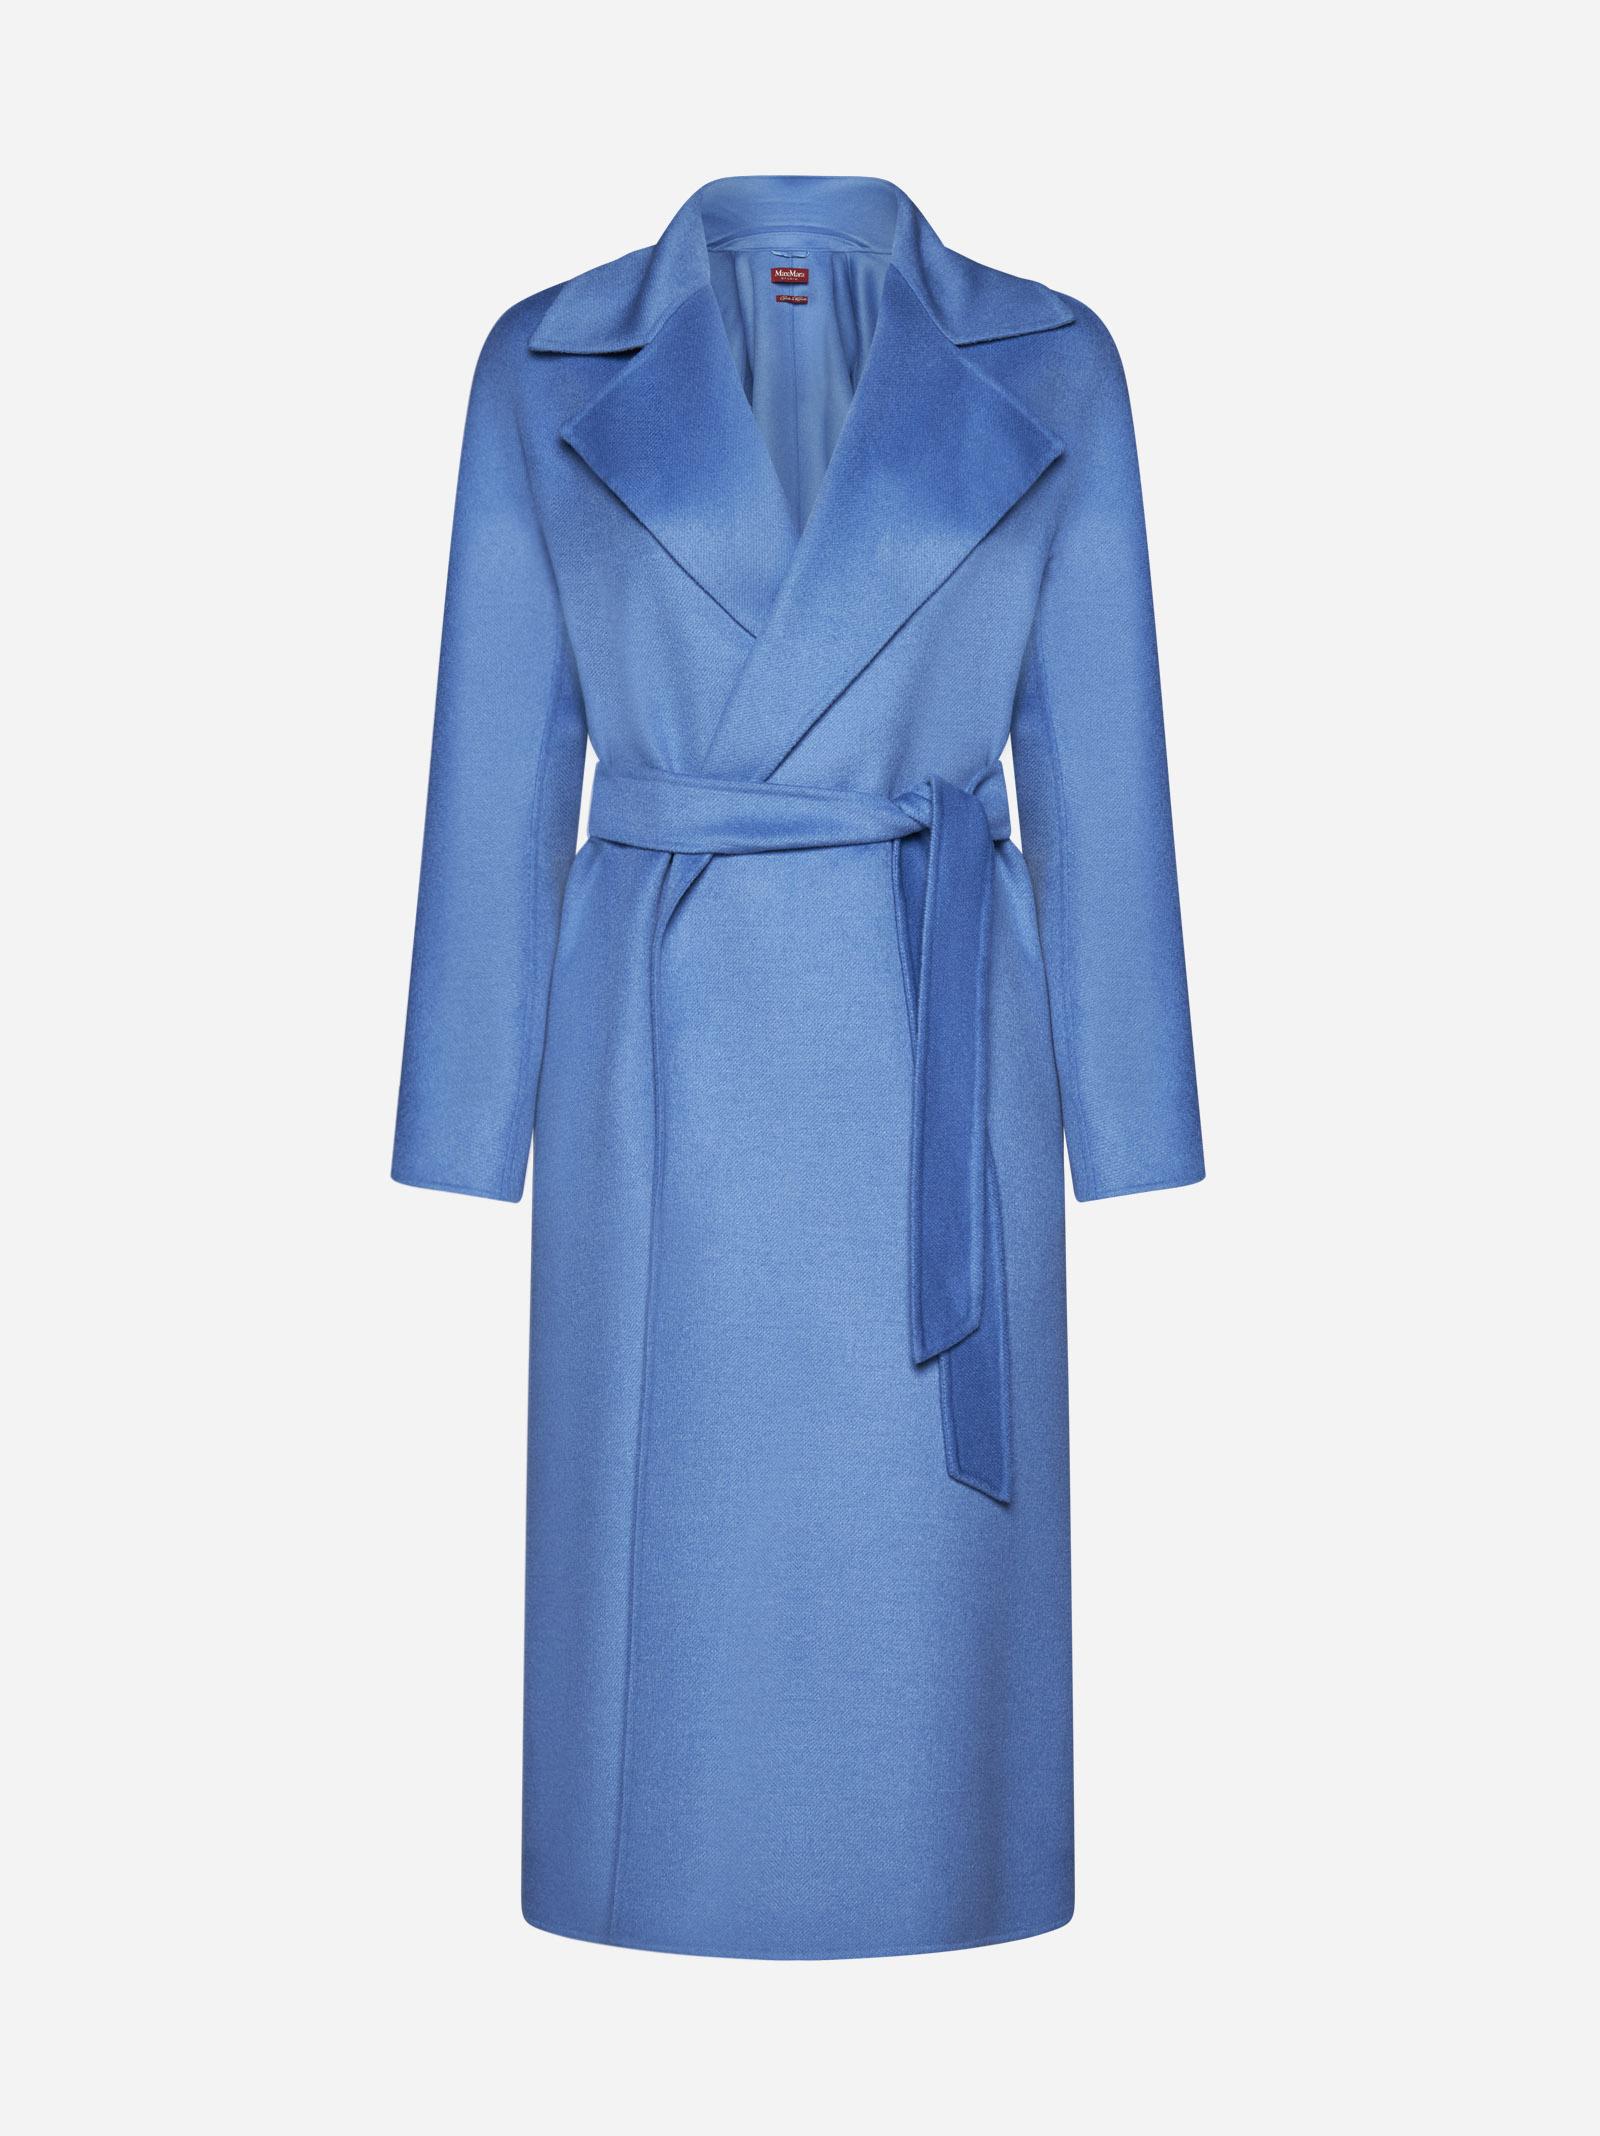 Max Mara Studio Cles Wool-blend Coat in Blue | Lyst